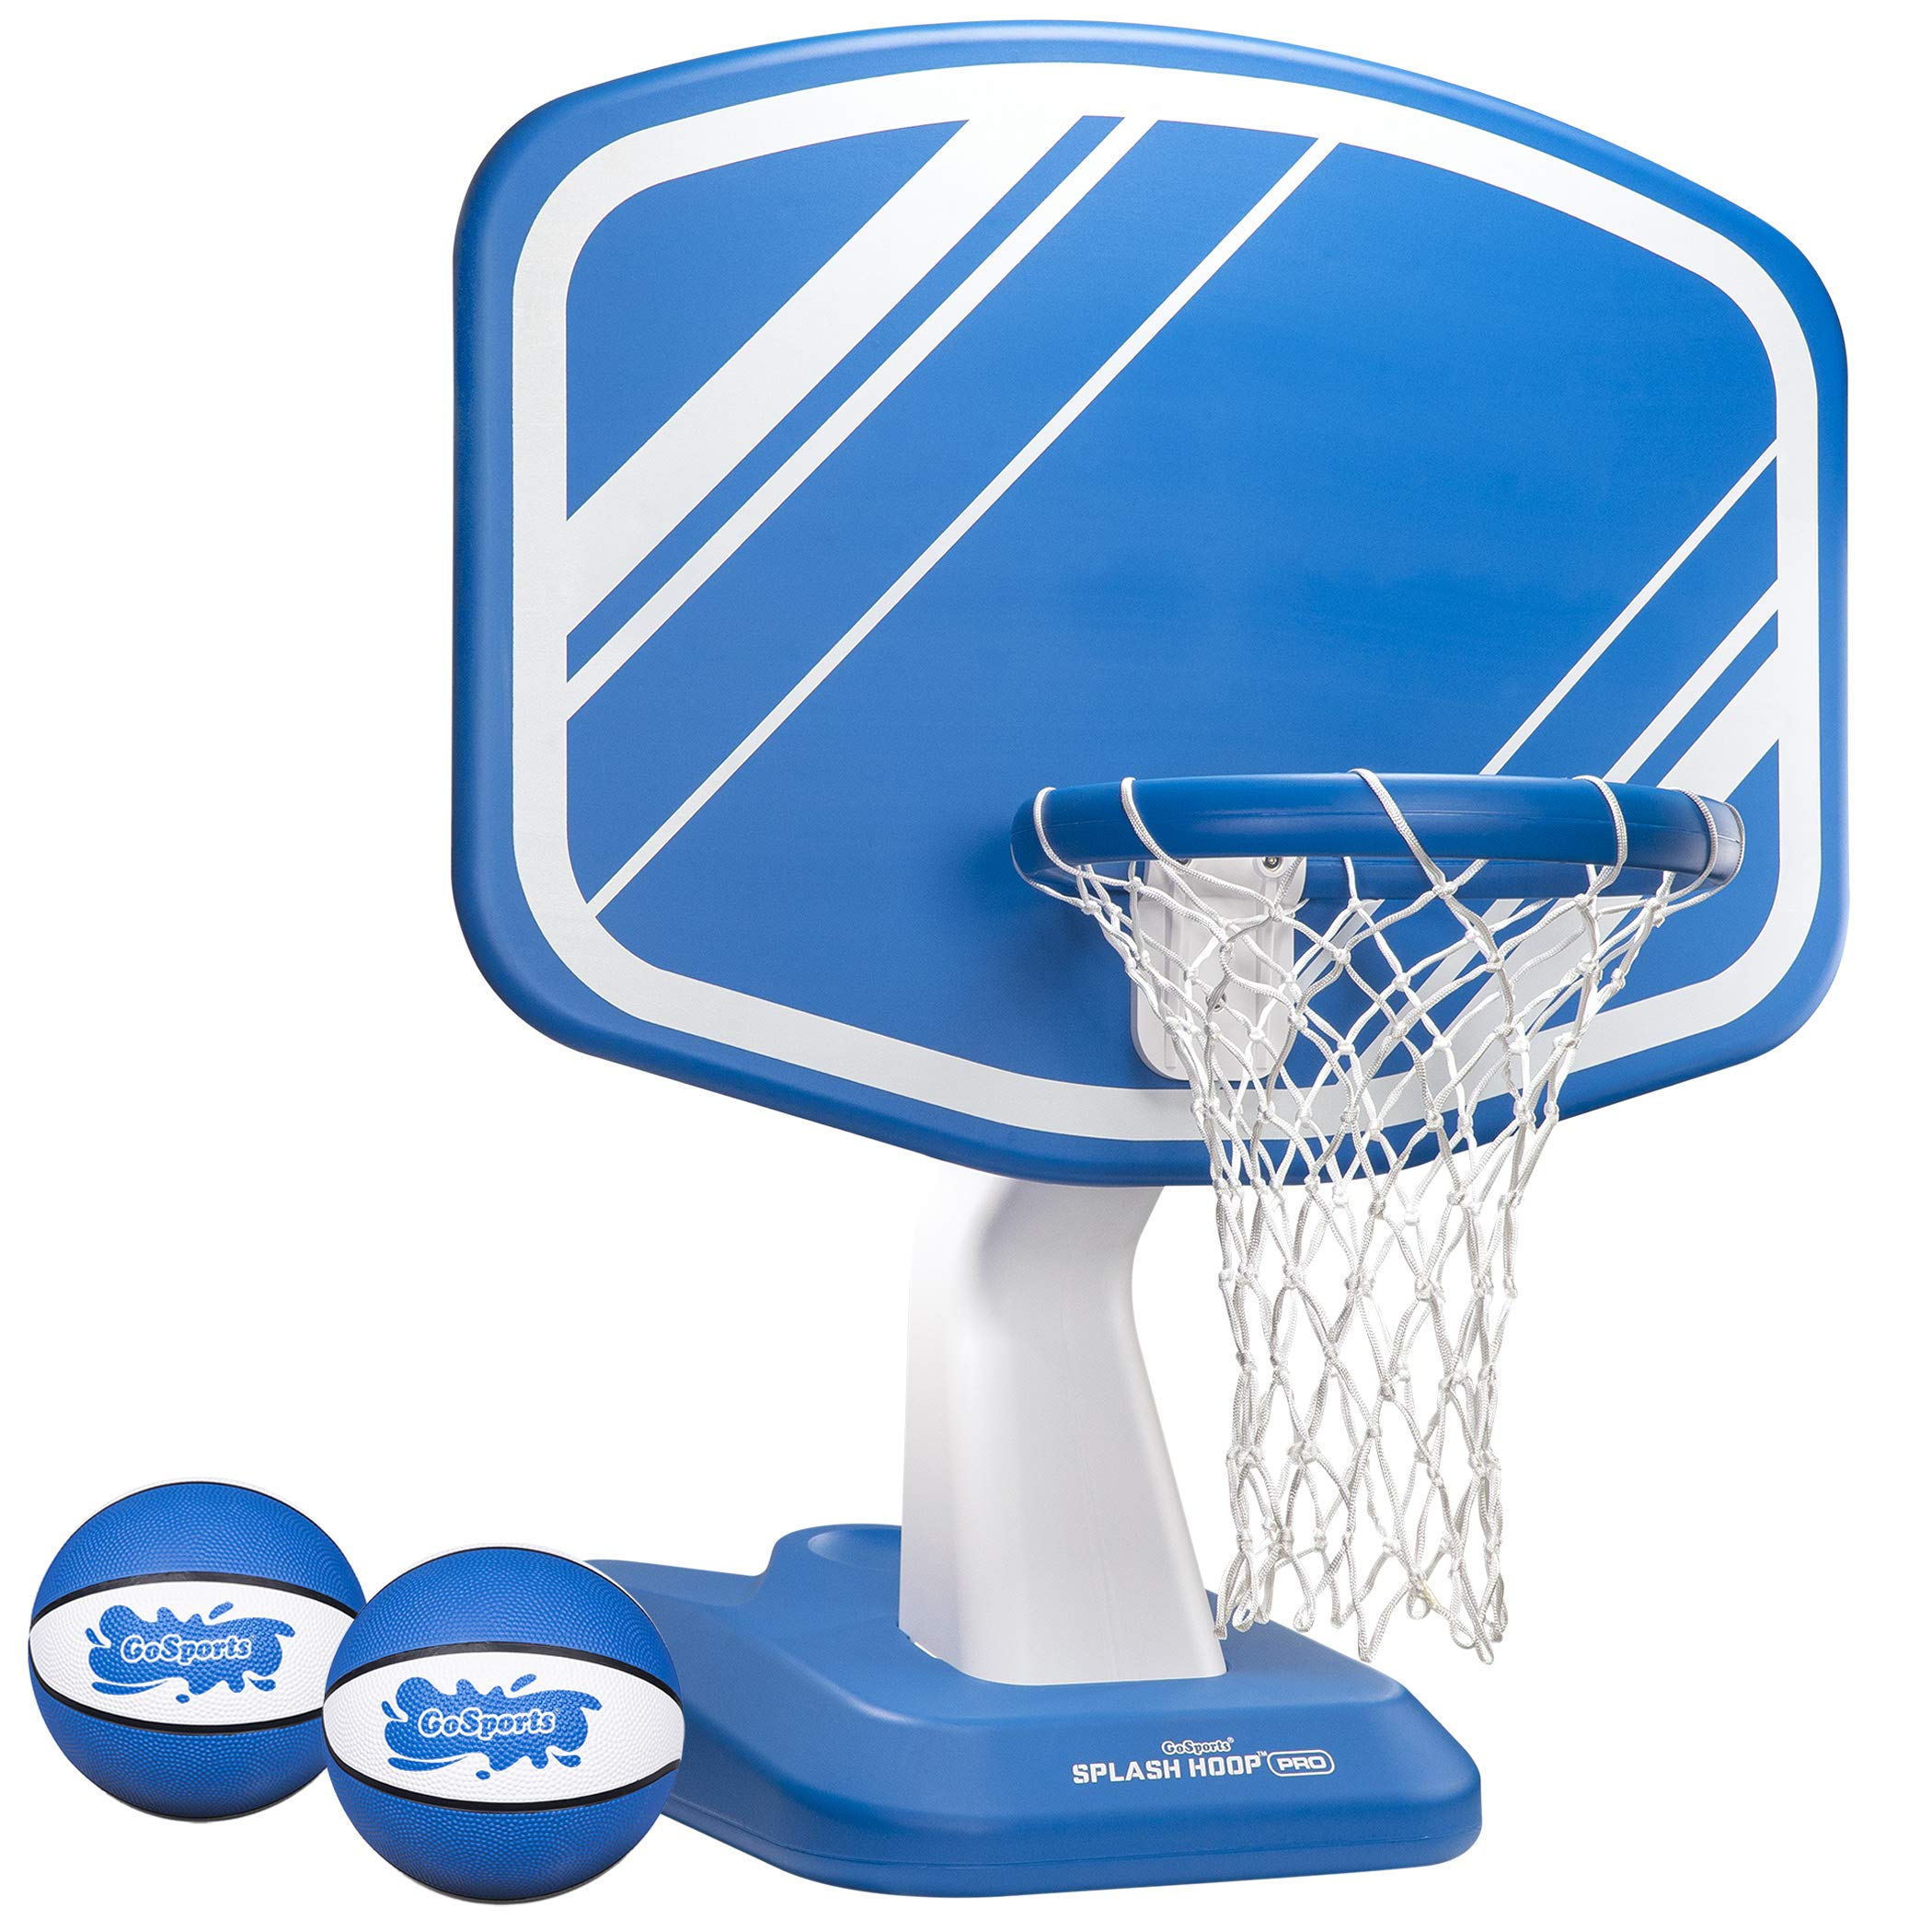 GoSports Splash Hoop 泳池篮球游戏，包括池畔水上篮球框、2 个球和打气筒，选择您的风格...